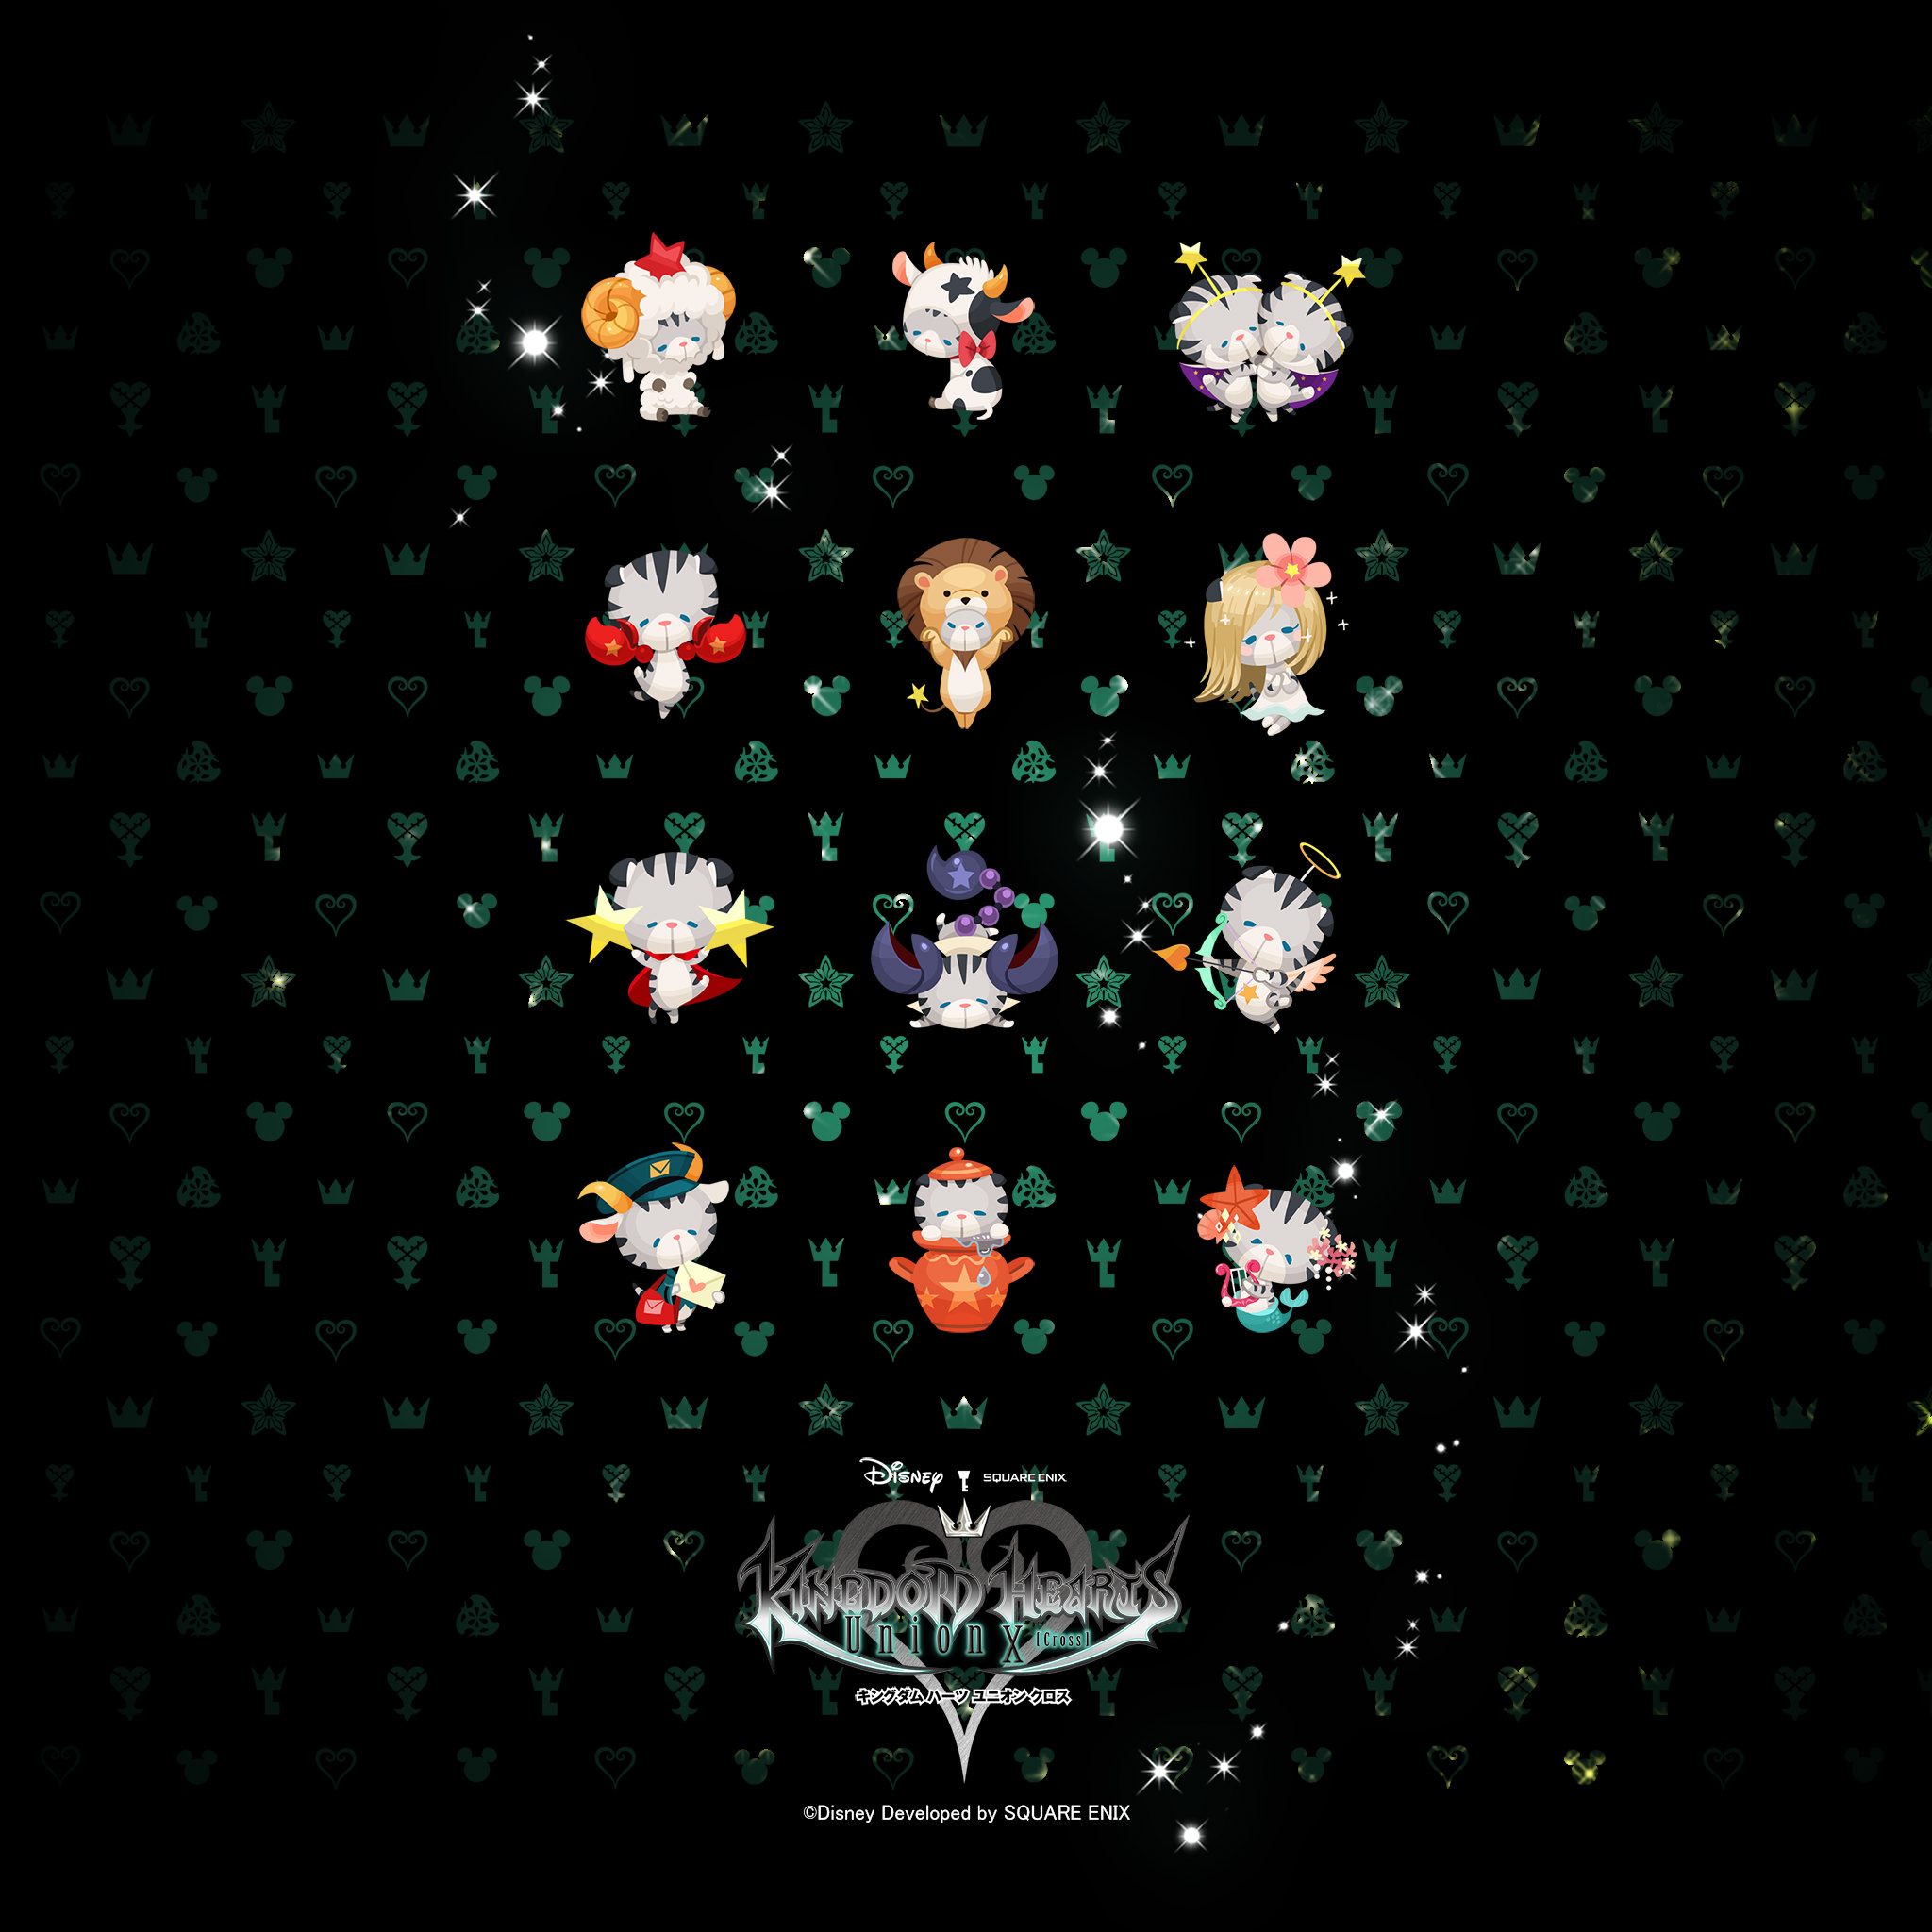 Kingdom Hearts Union Cross 3rd Anniversary Official Wallpaper